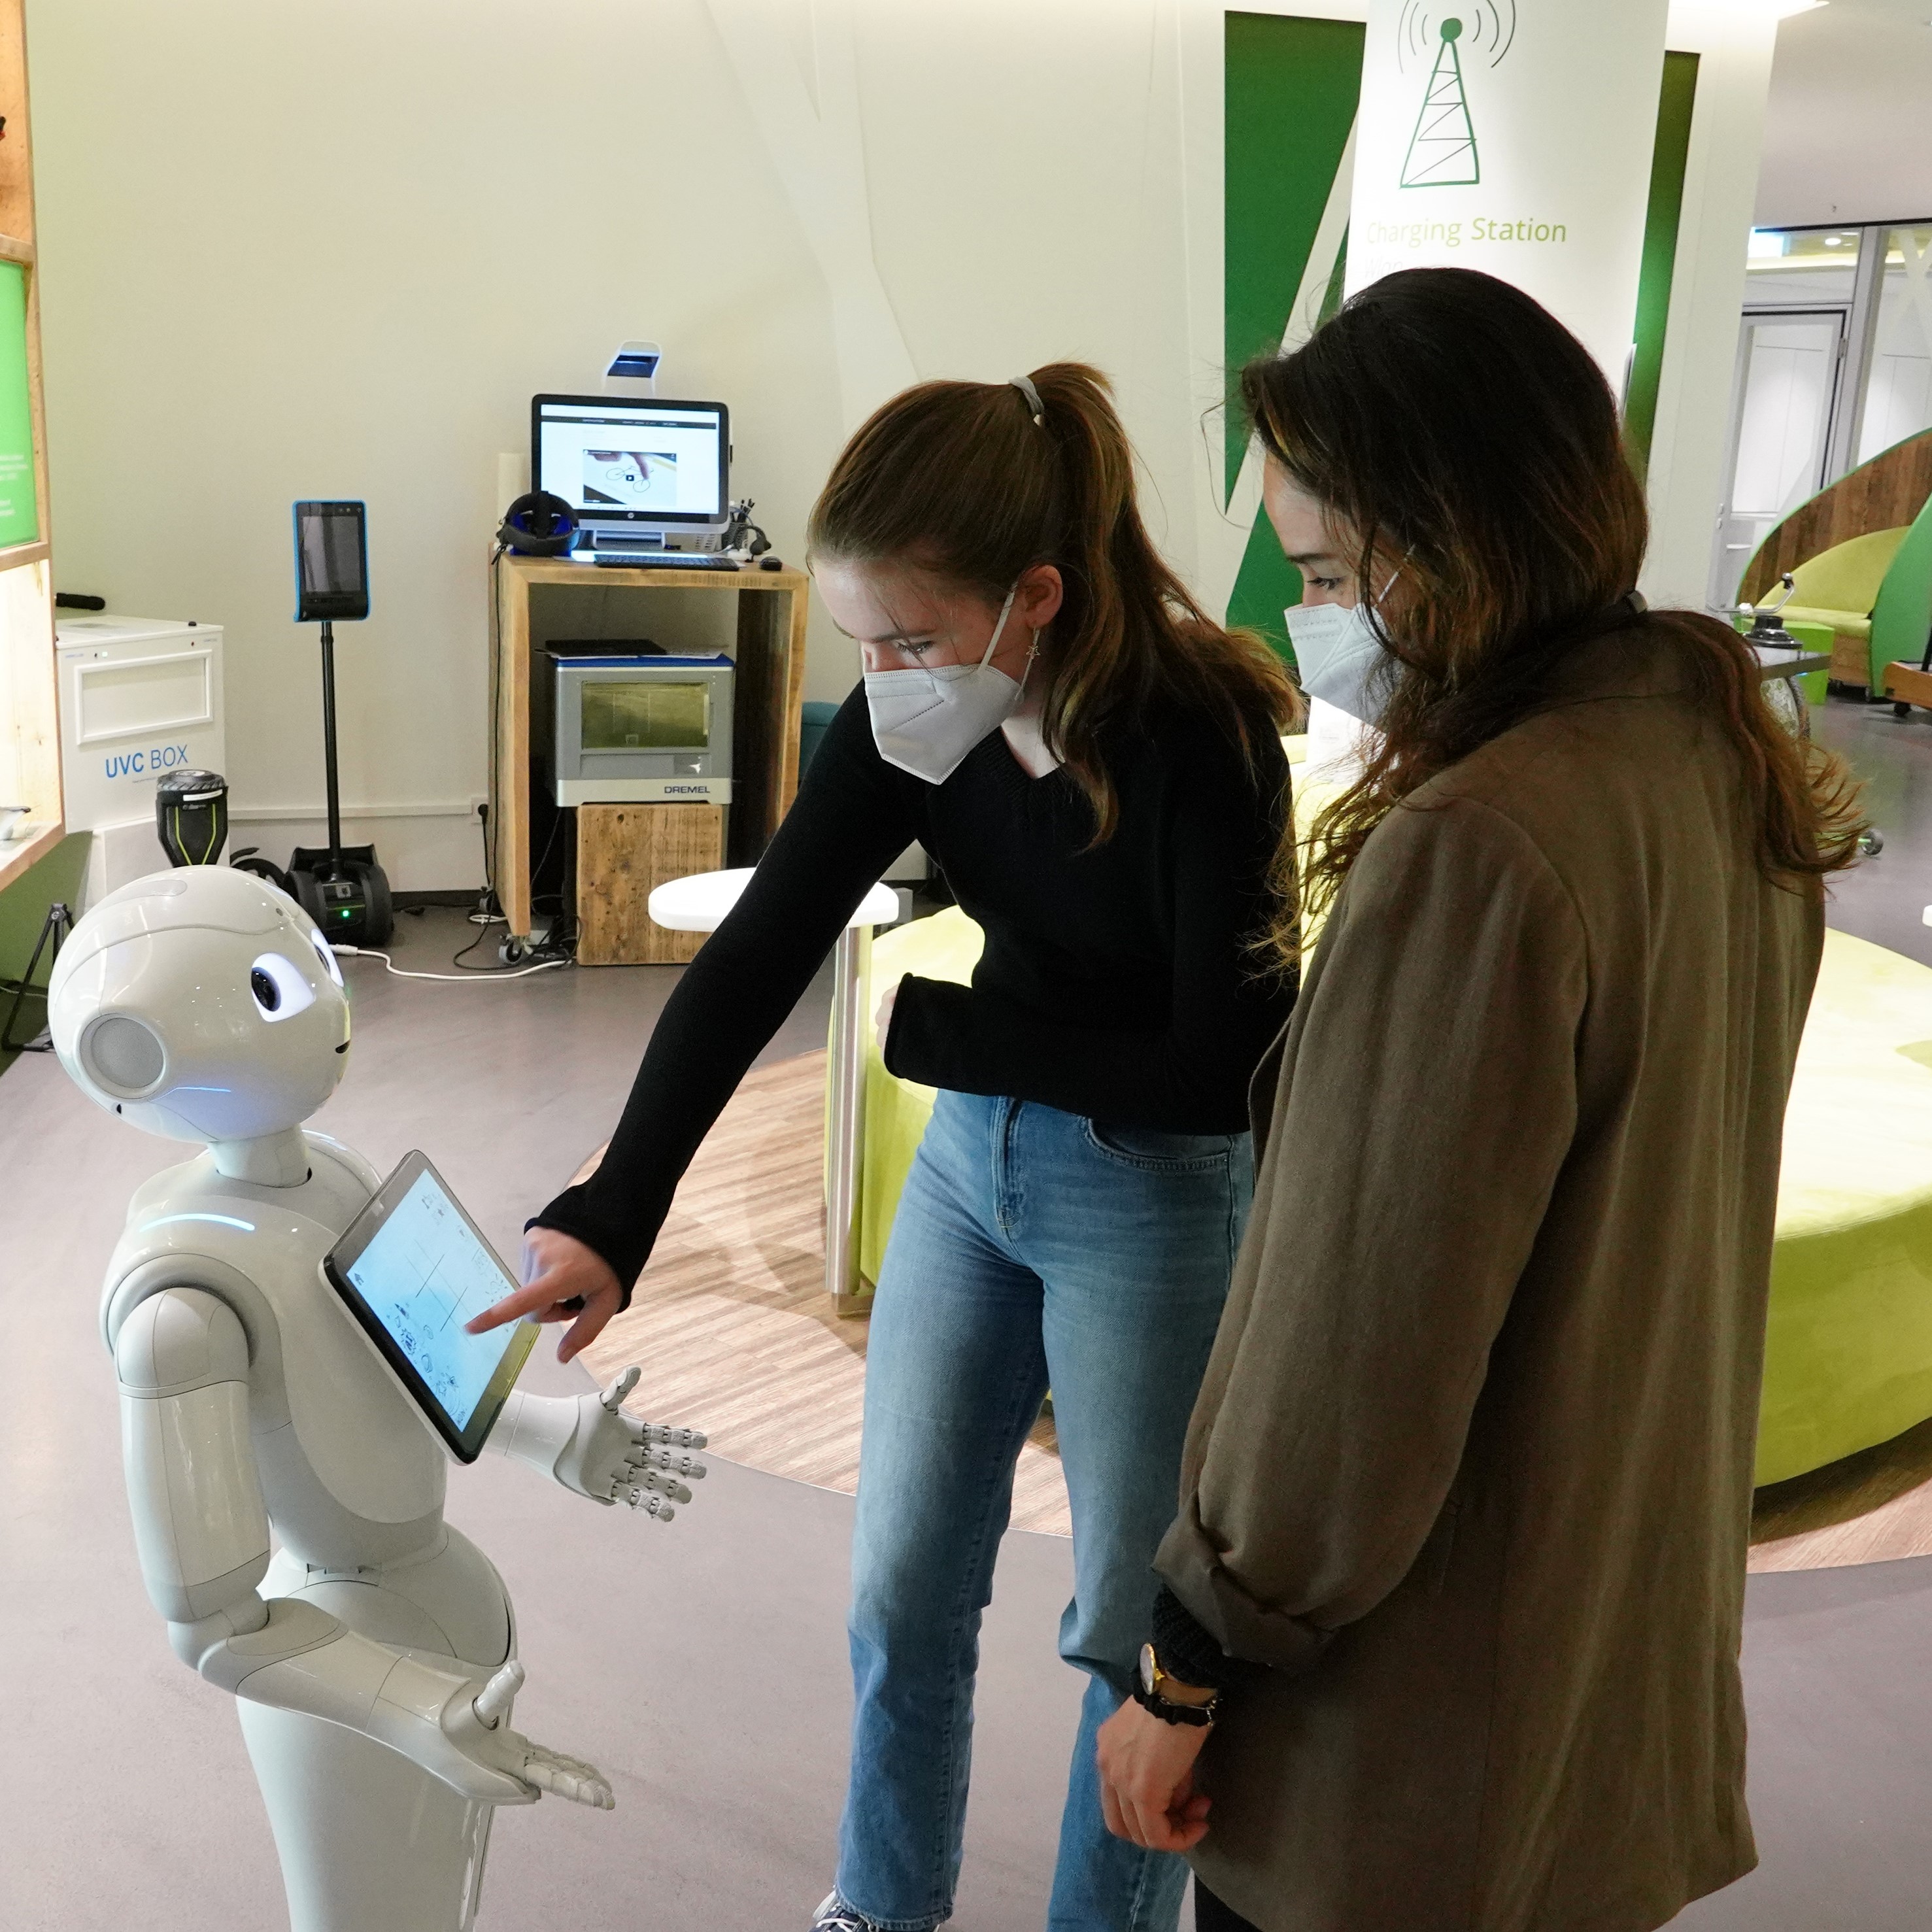 Zwei Schülerinnen beschäftigen sich mit dem Roboter "Pepper".